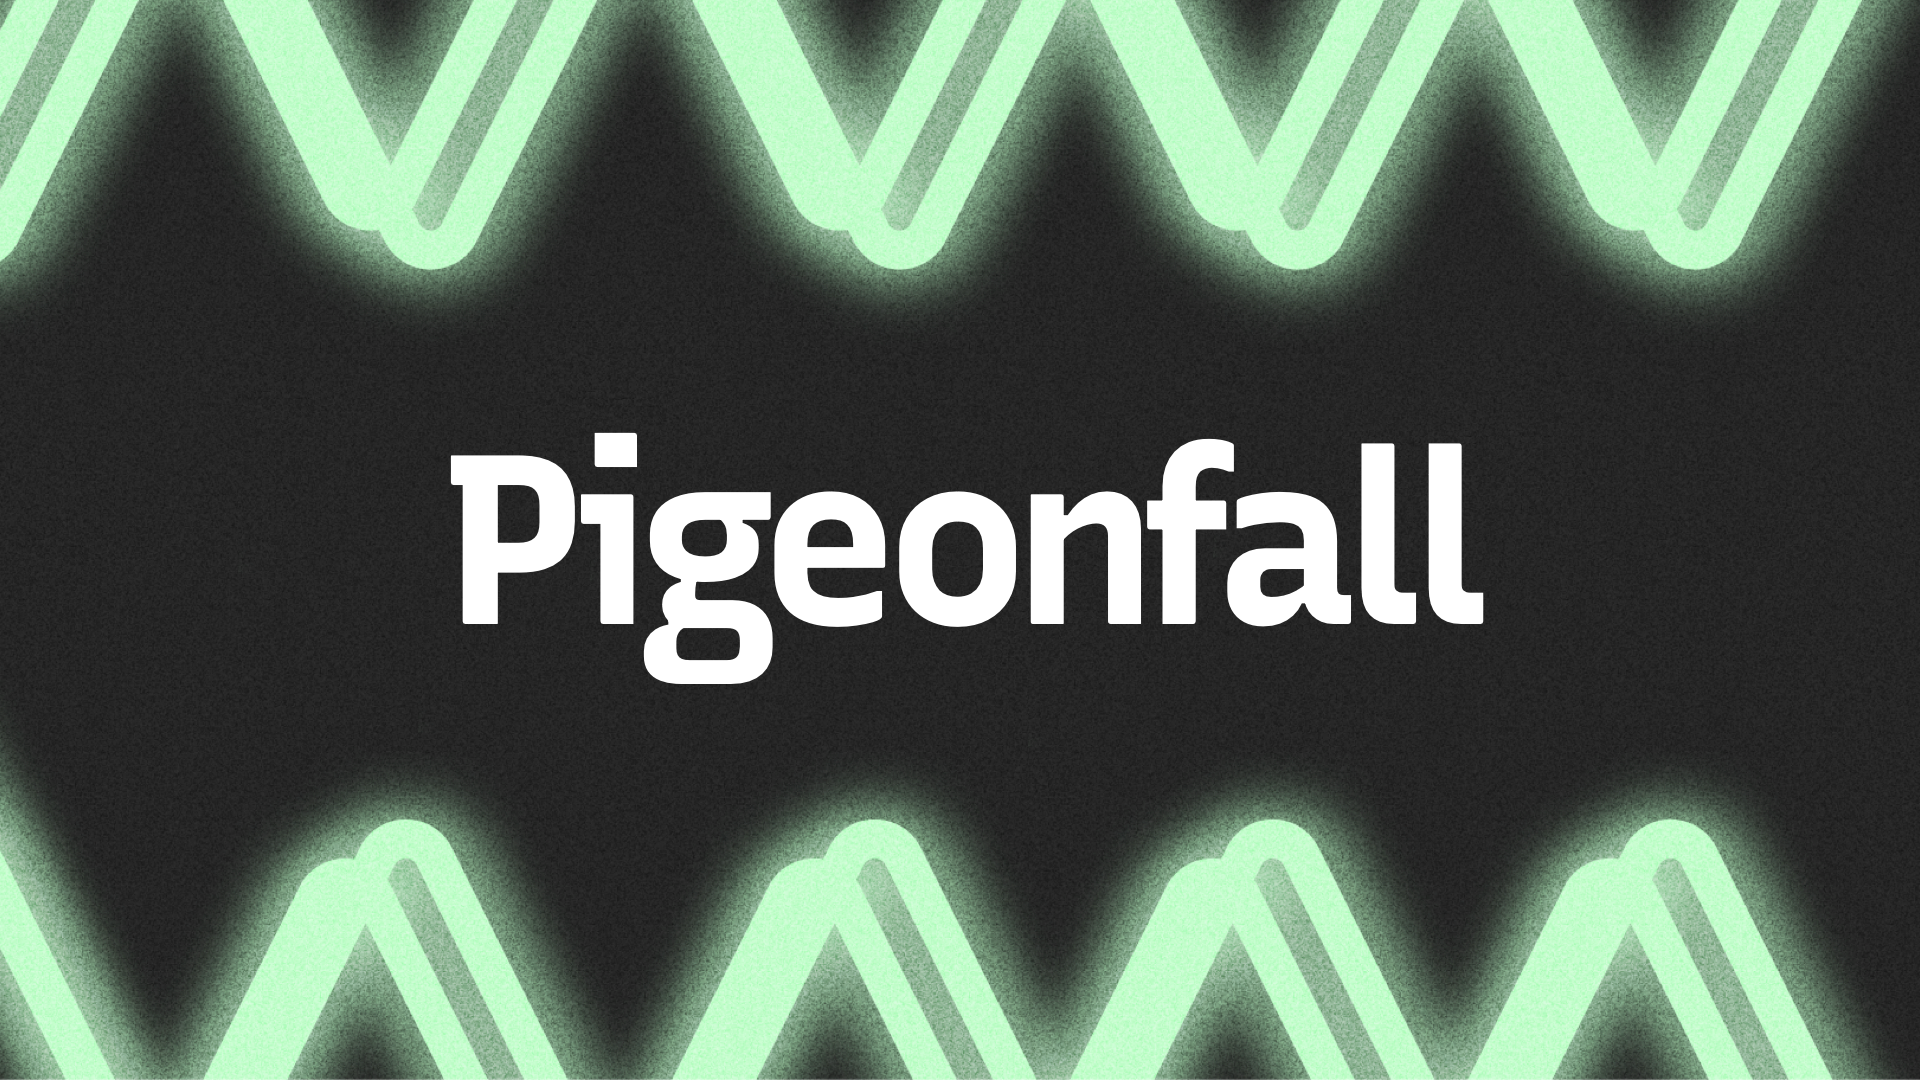 Pigeonfall Vulnerability Report